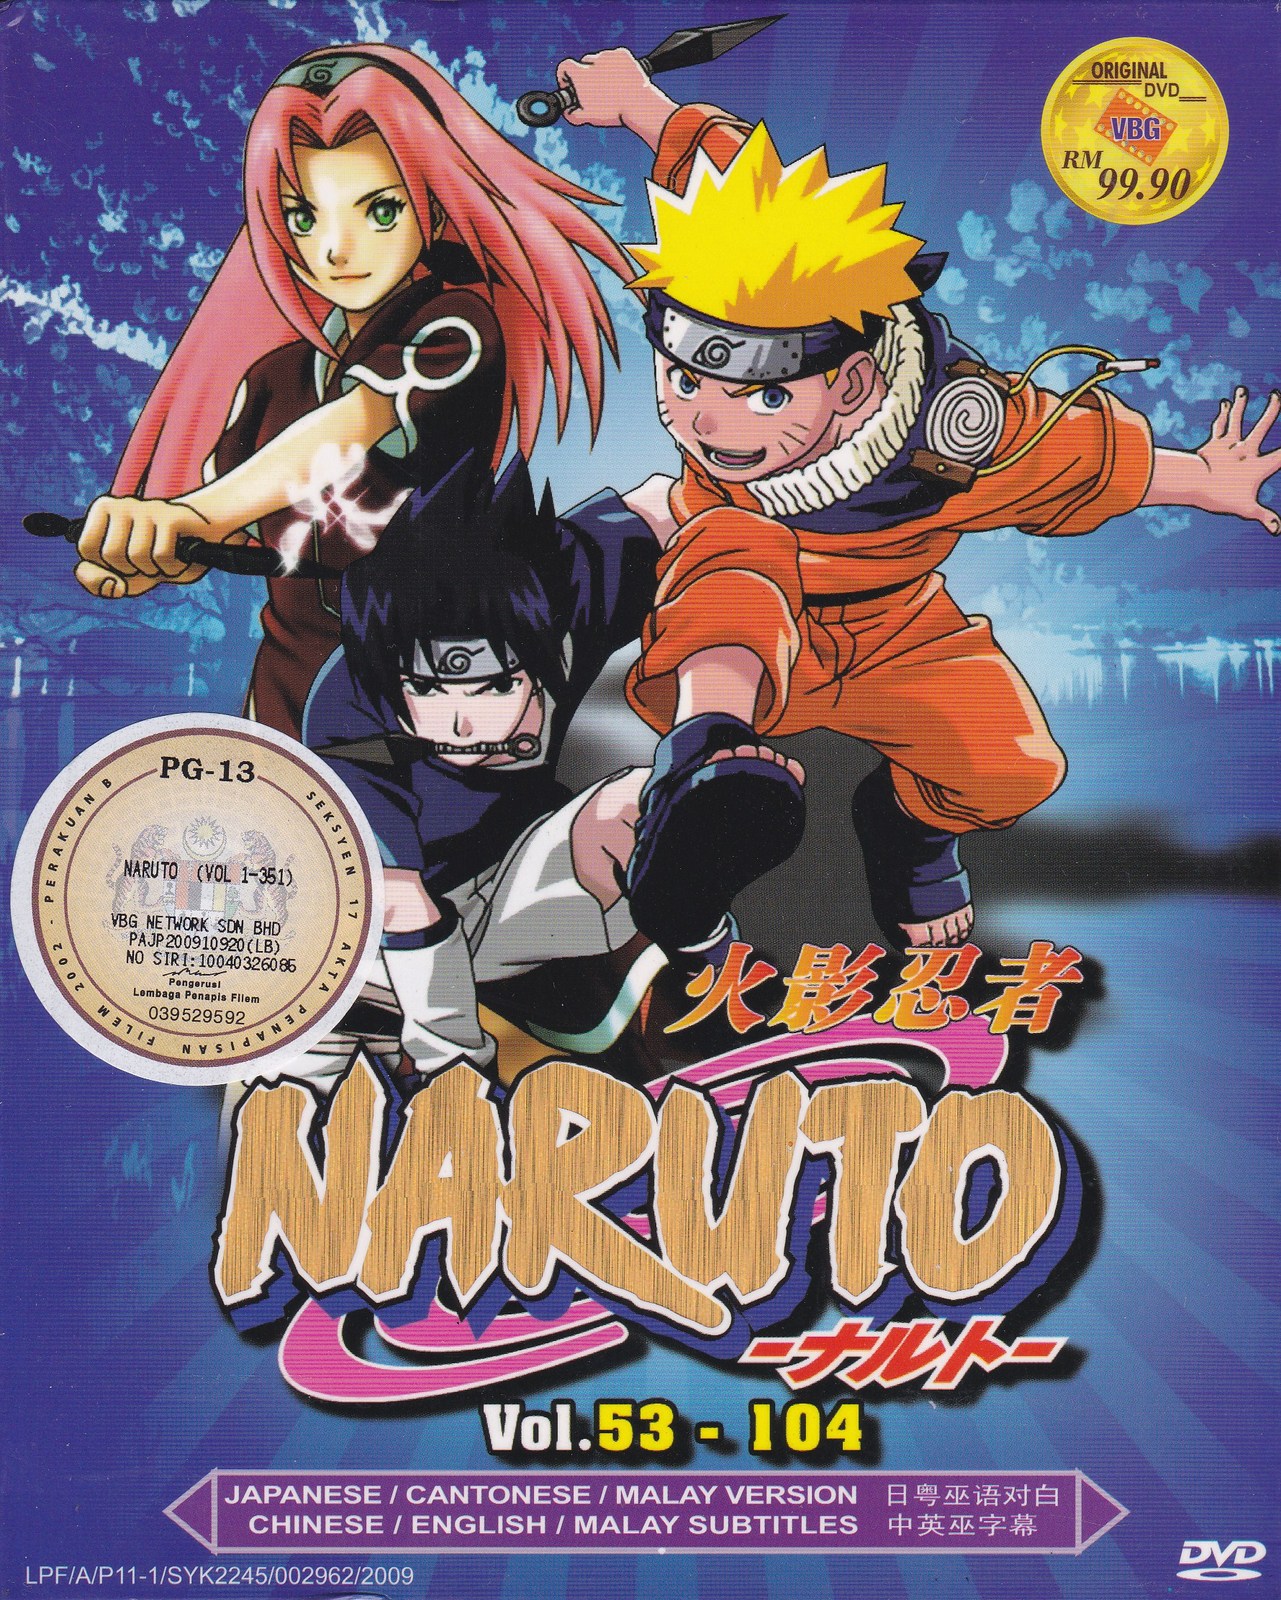 naruto shippuden episode 259 english dubbed download